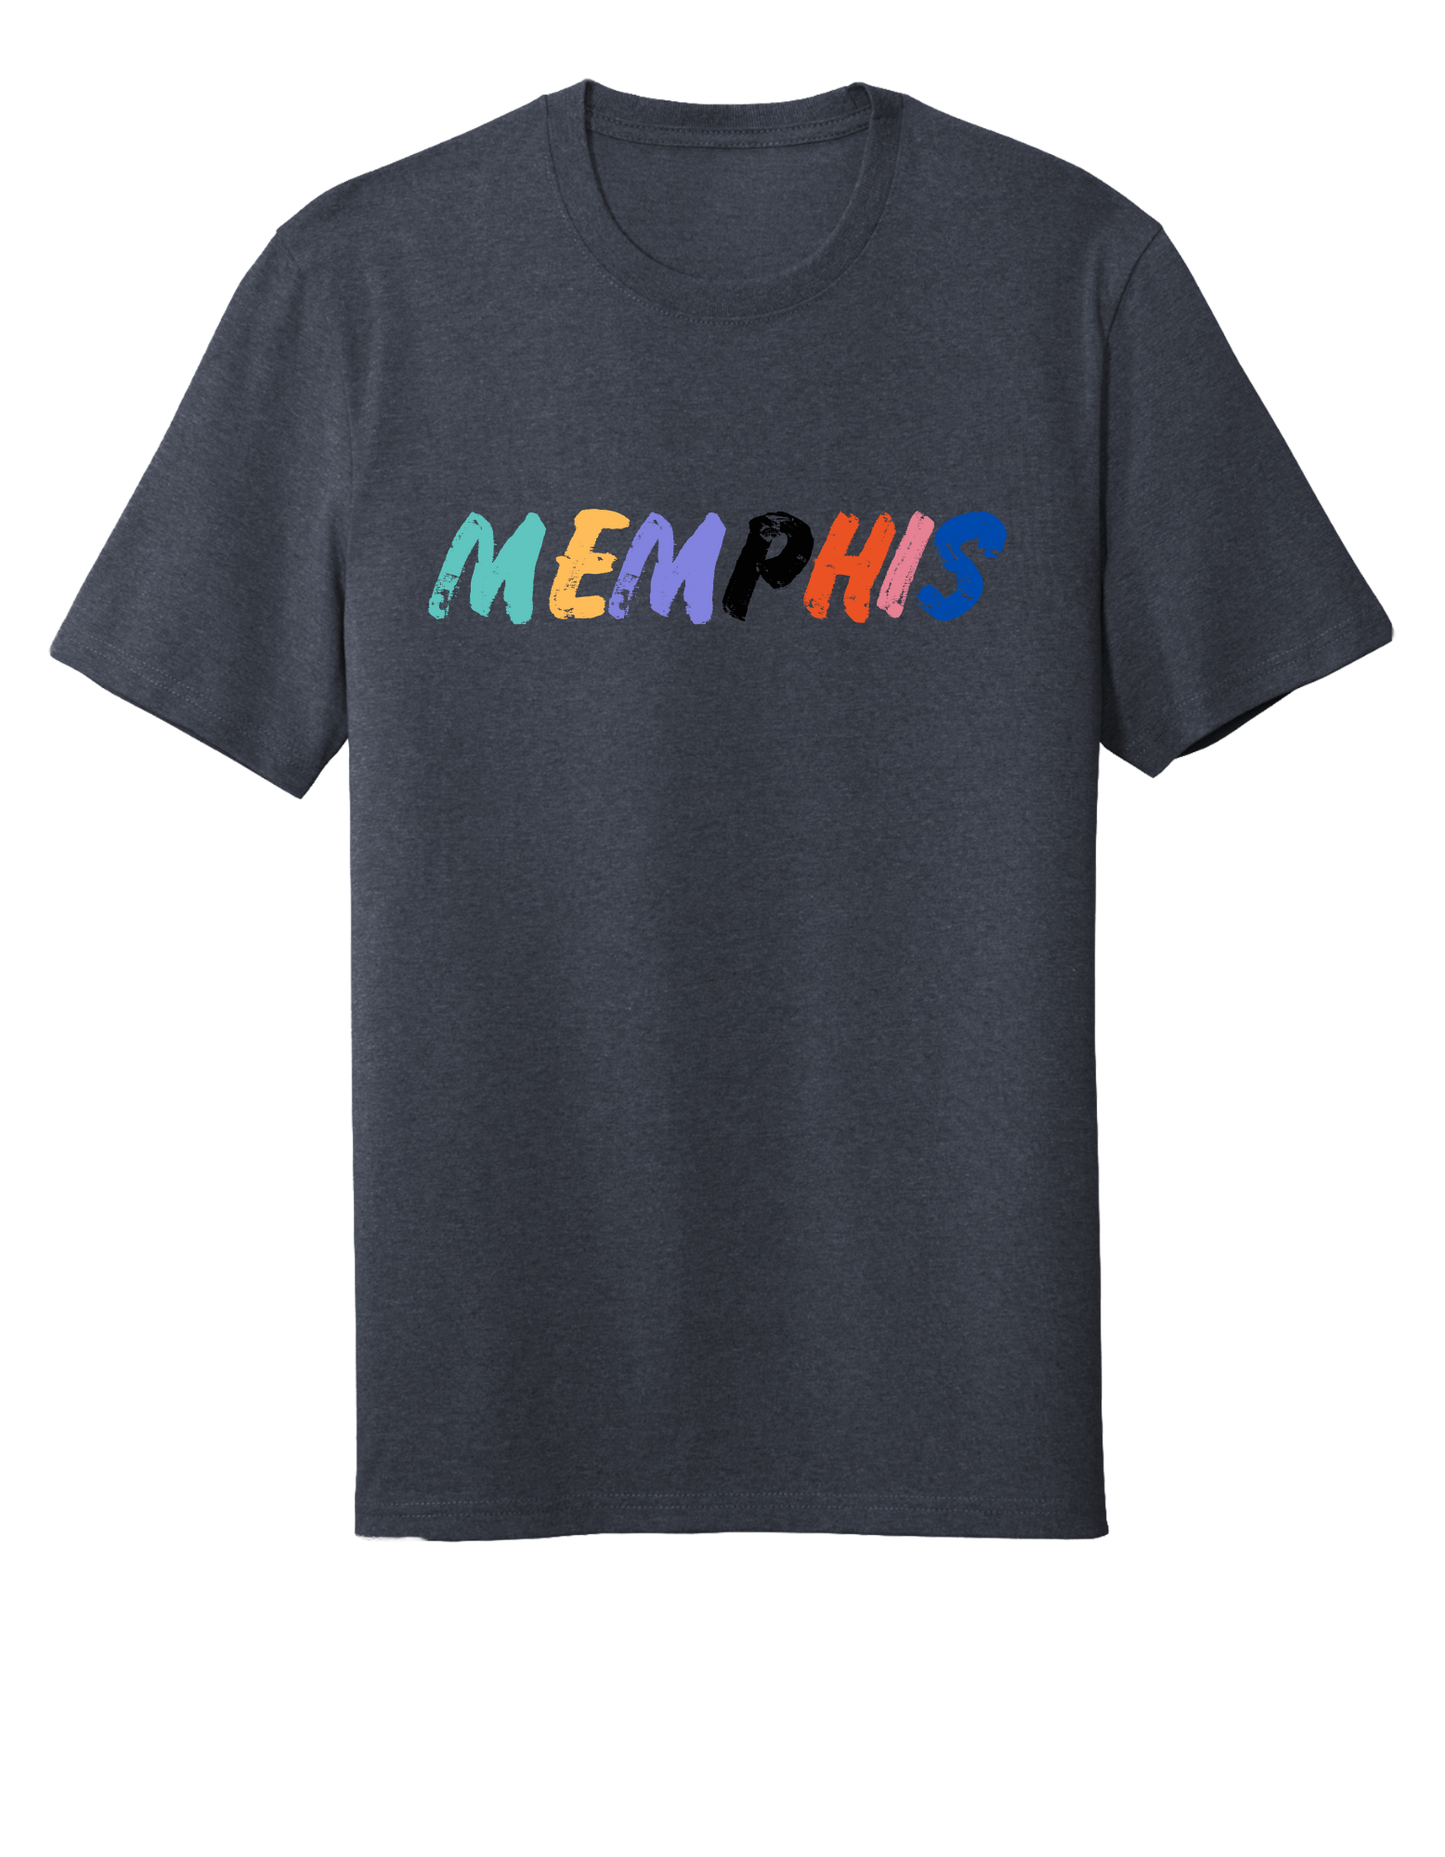 Chalkboard Memphis T-Shirt - Black, Light Heather Grey and Navy Heather